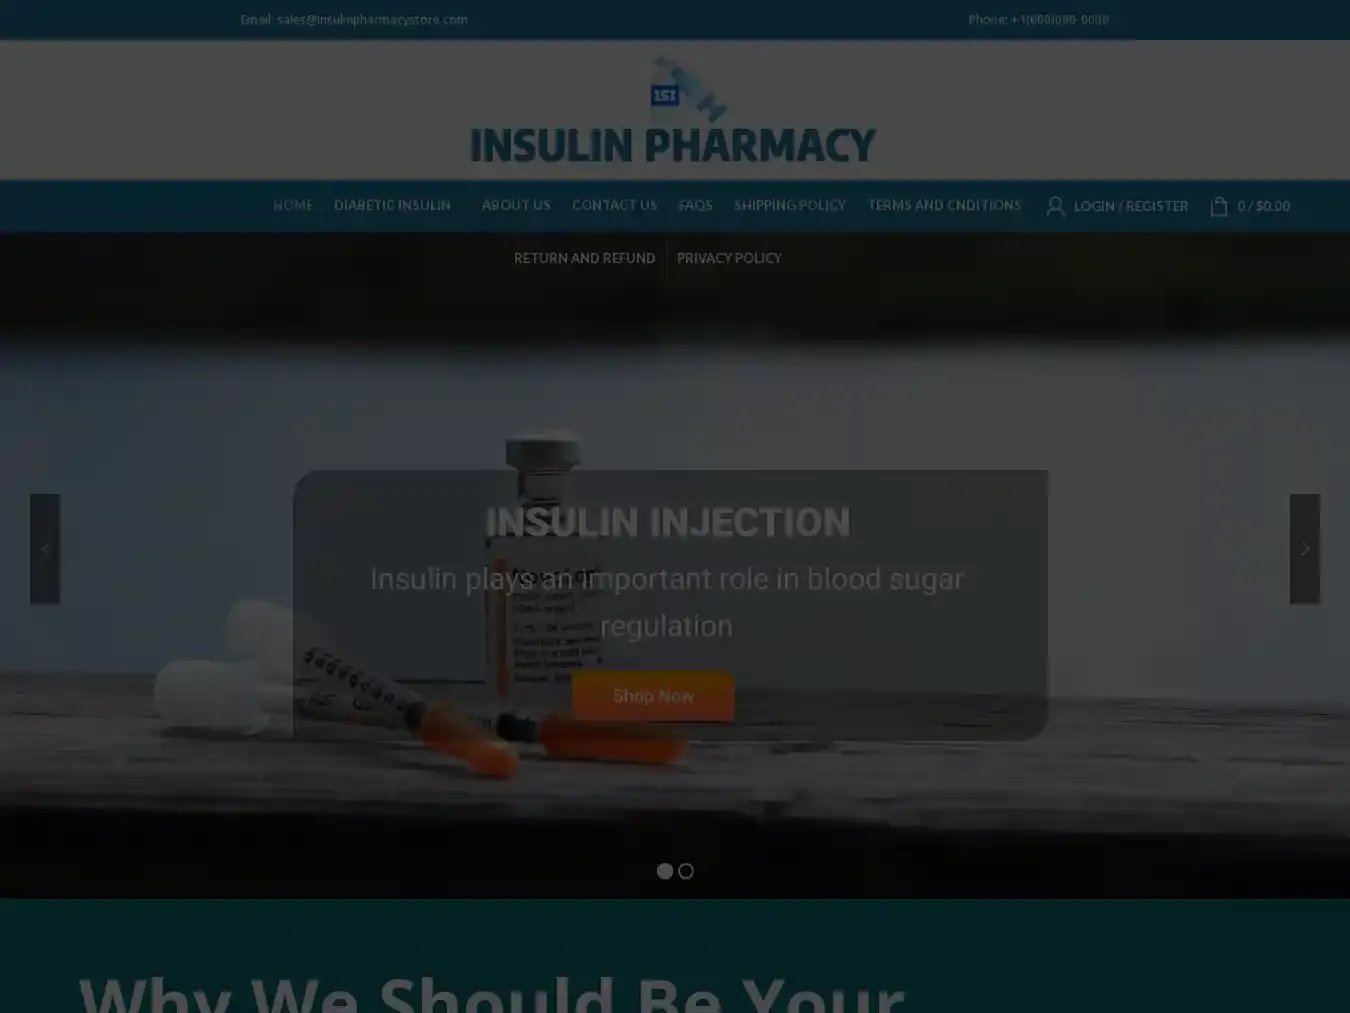 Insulinpharmacystore.com Fraudulent Medical website.